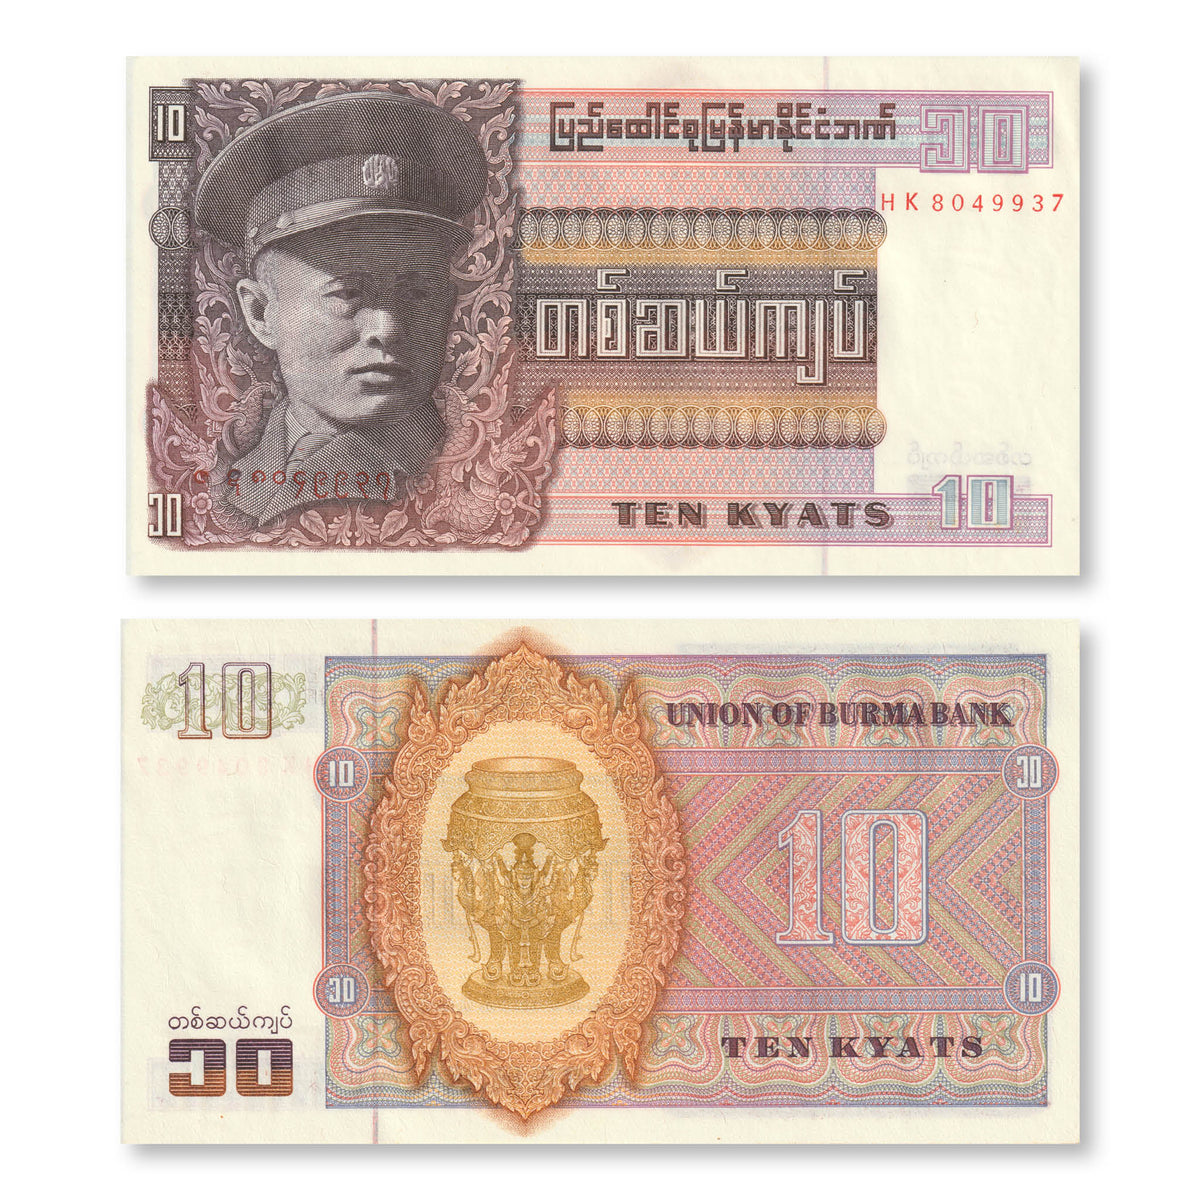 Burma 10 Kyat, 1973, B1003a, P58, aUNC - Robert's World Money - World Banknotes